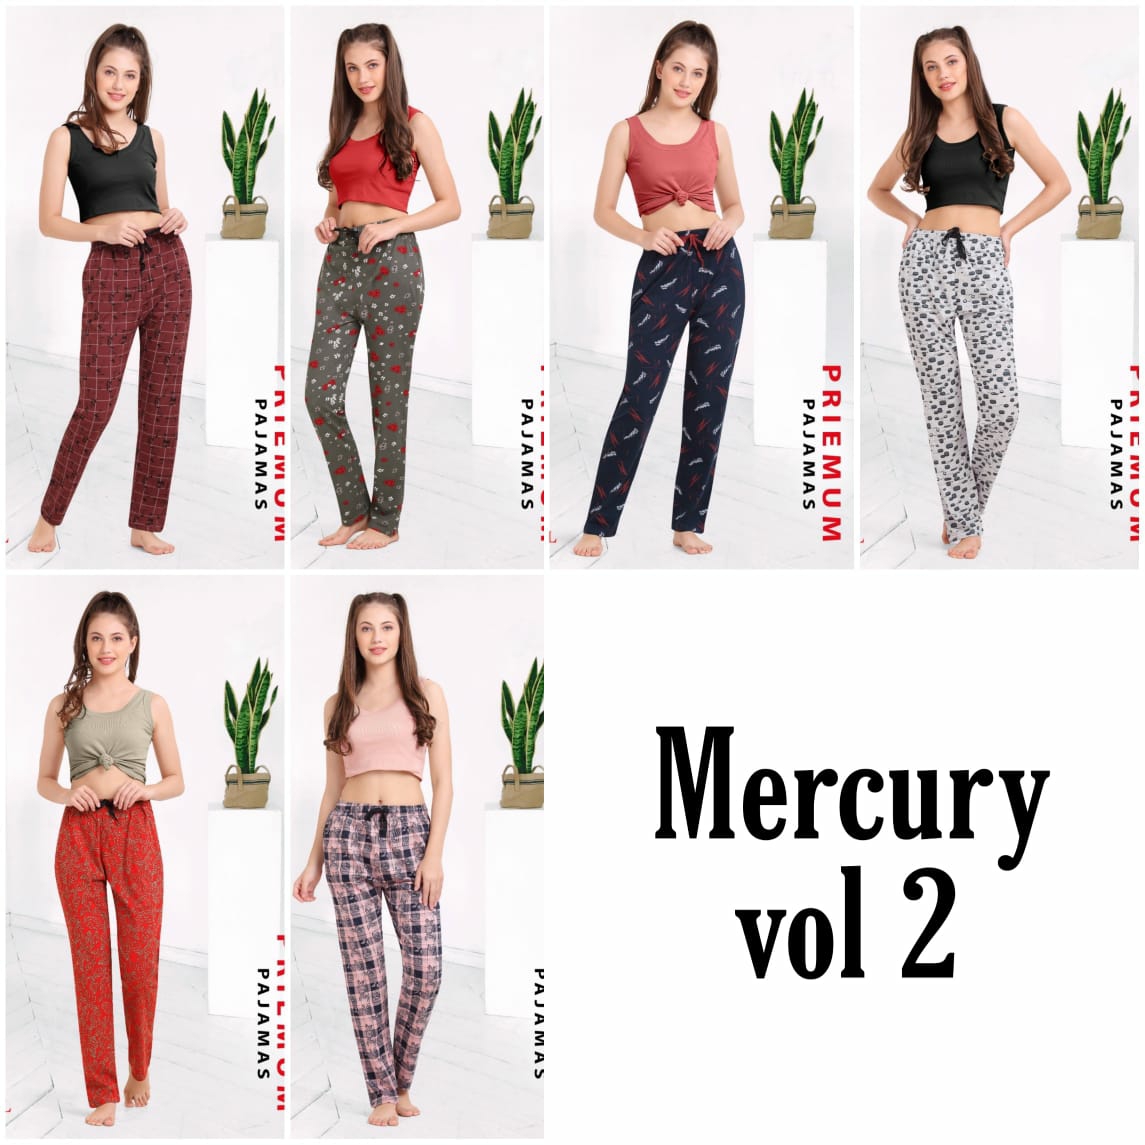 Gaabha mercury vol 2 night wear hosiery collection